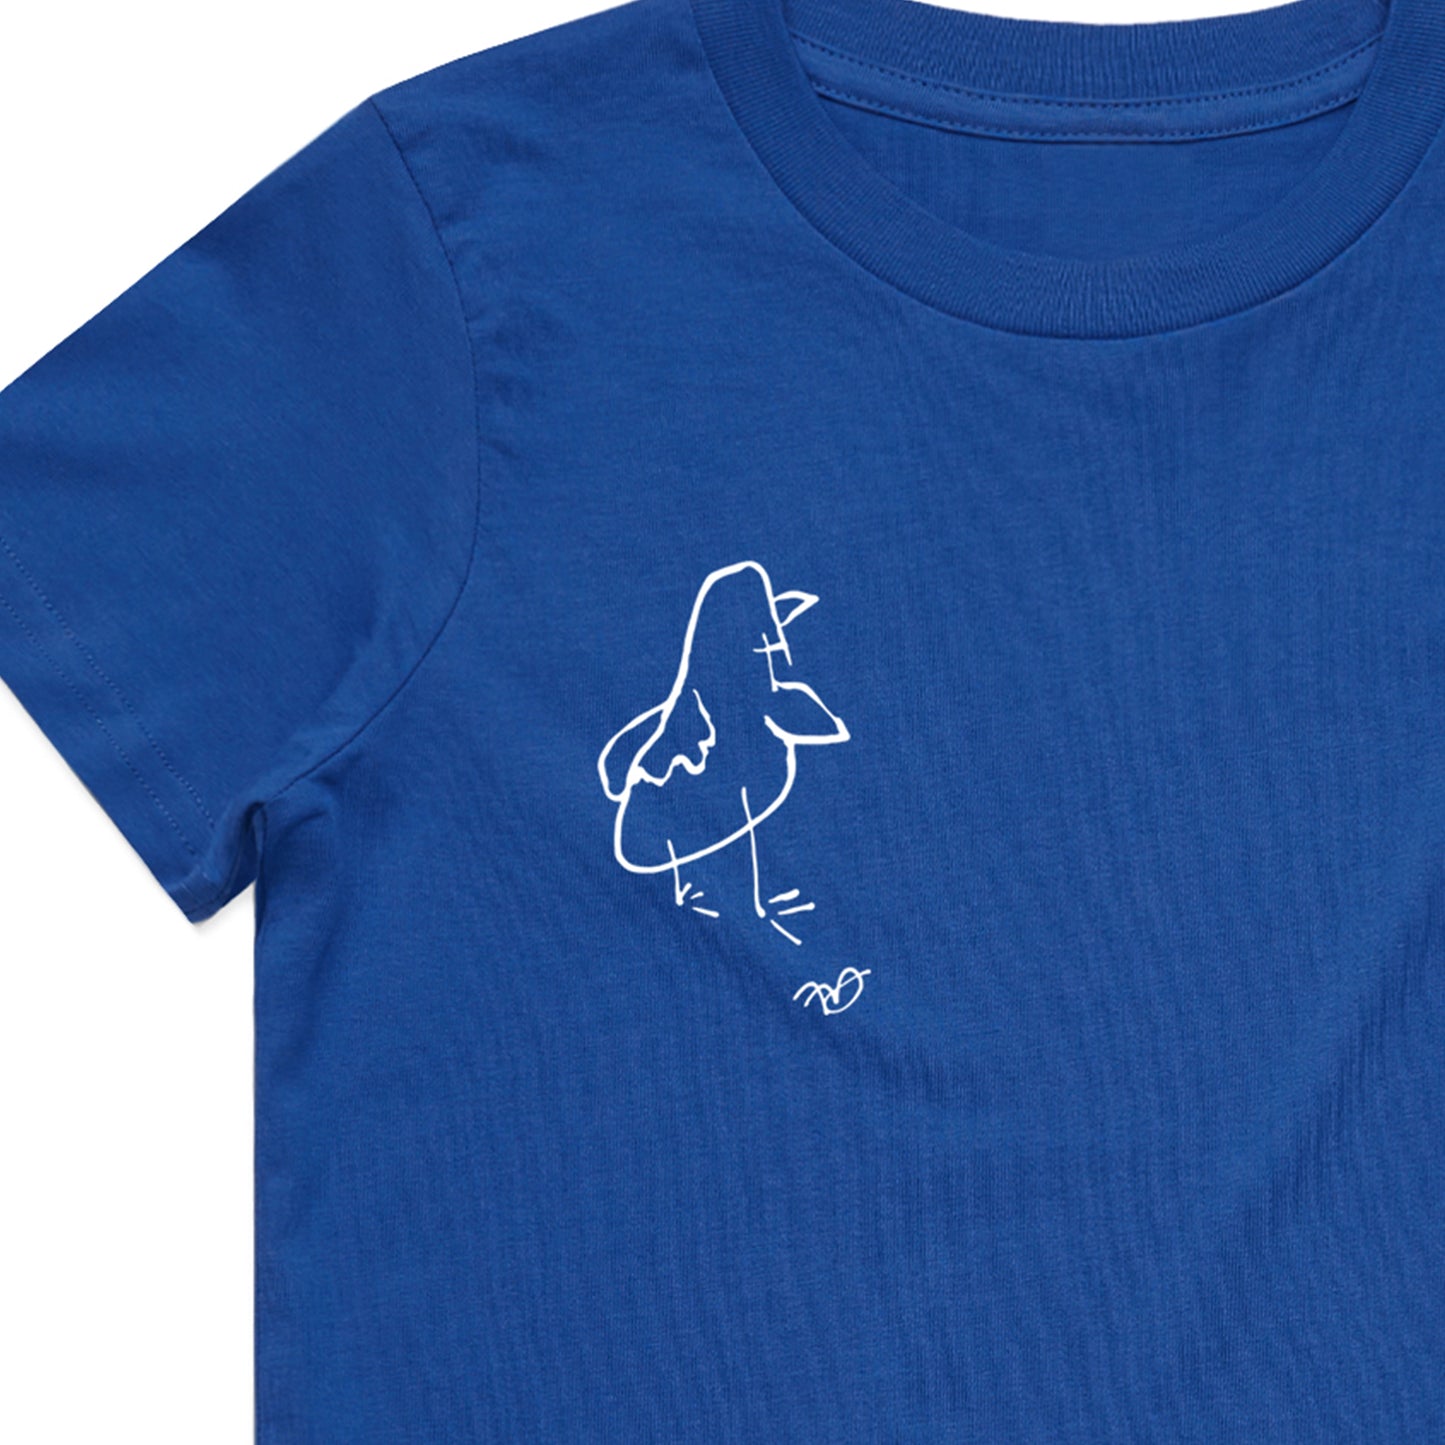 Kids 'Frank White' T-shirt - Blue